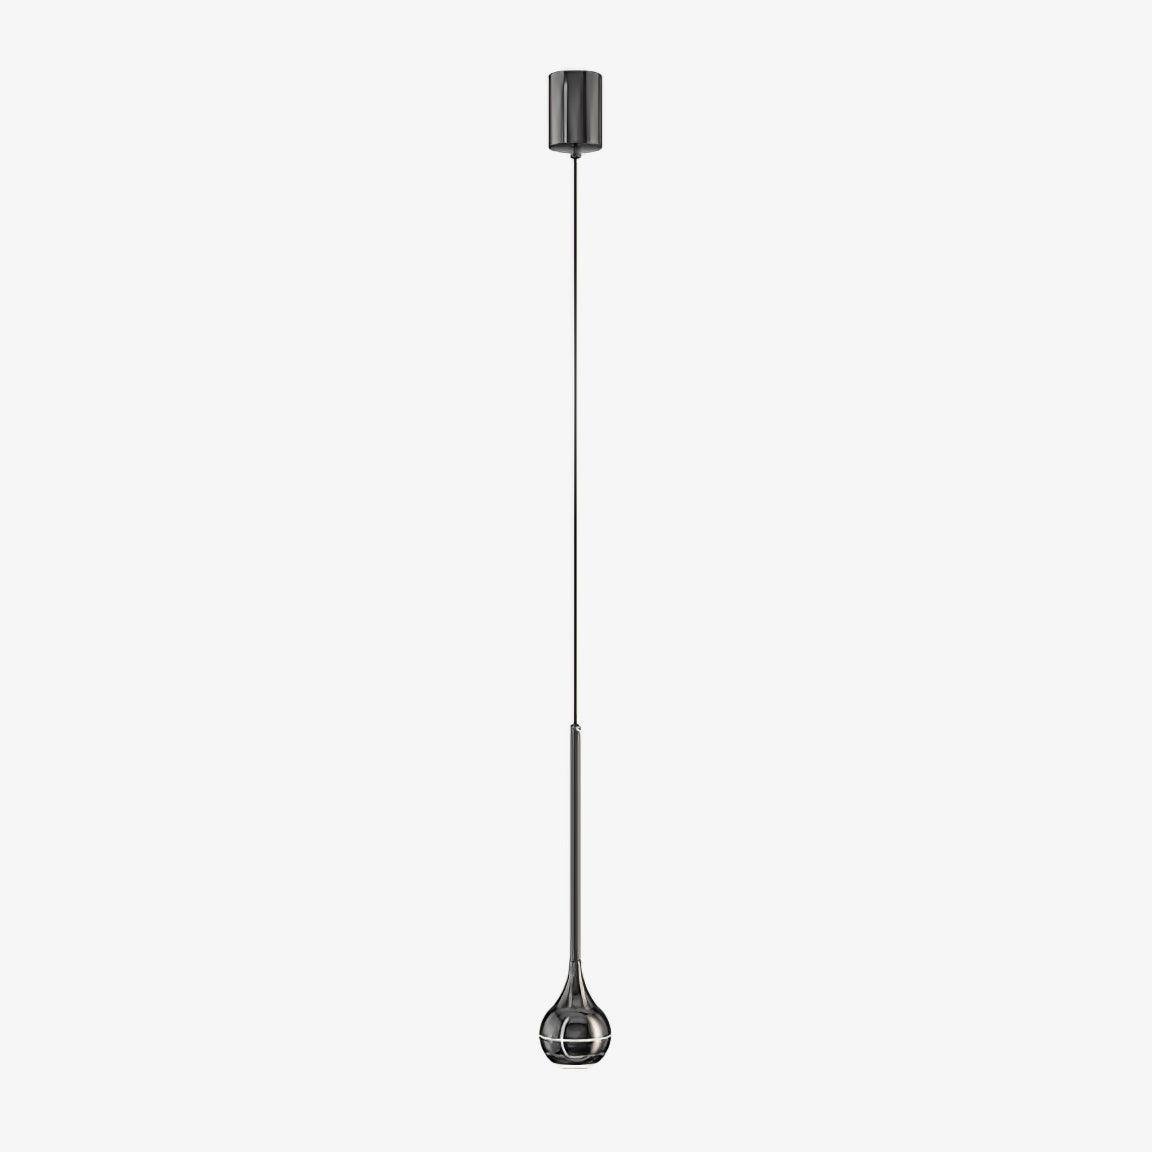 Black Elie Pendant Lamp with Cool Light, Diameter 3.1″ x Height 59″ (8cm x 150cm)